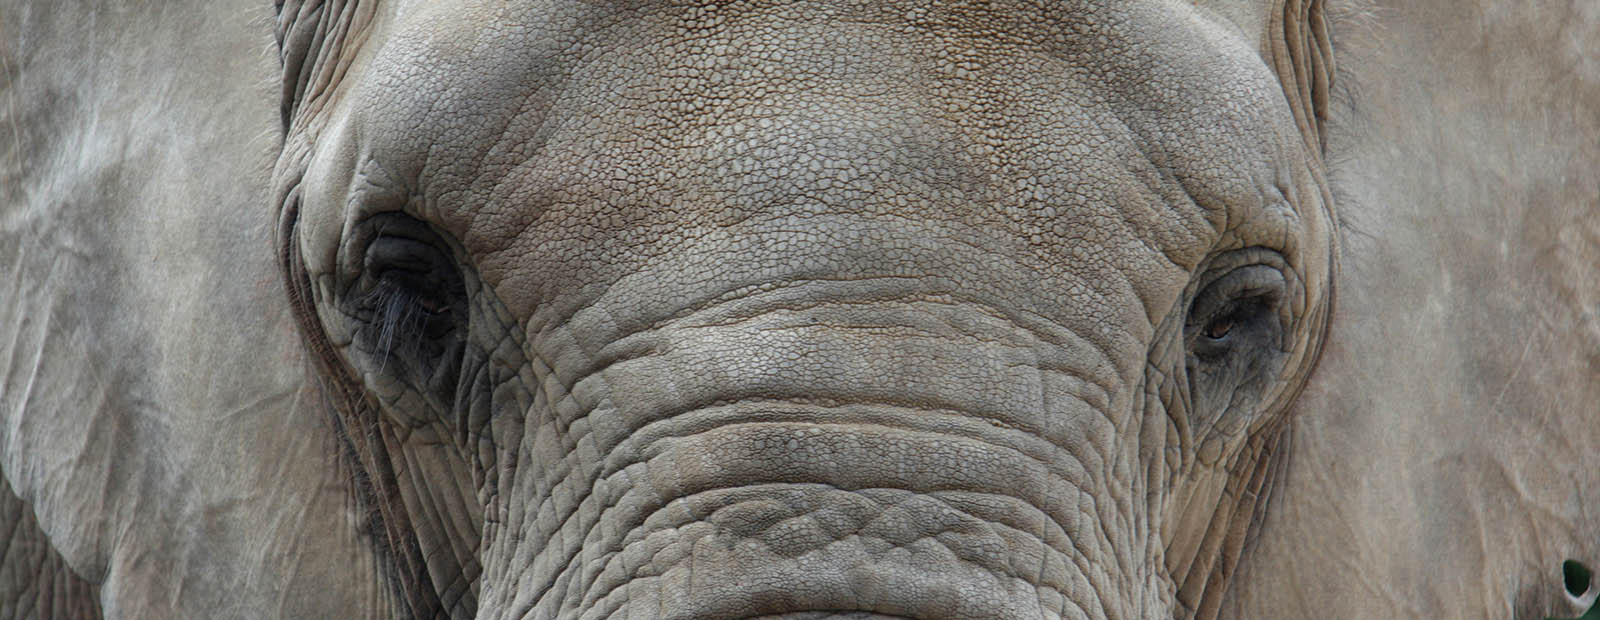 Elefant Mwana